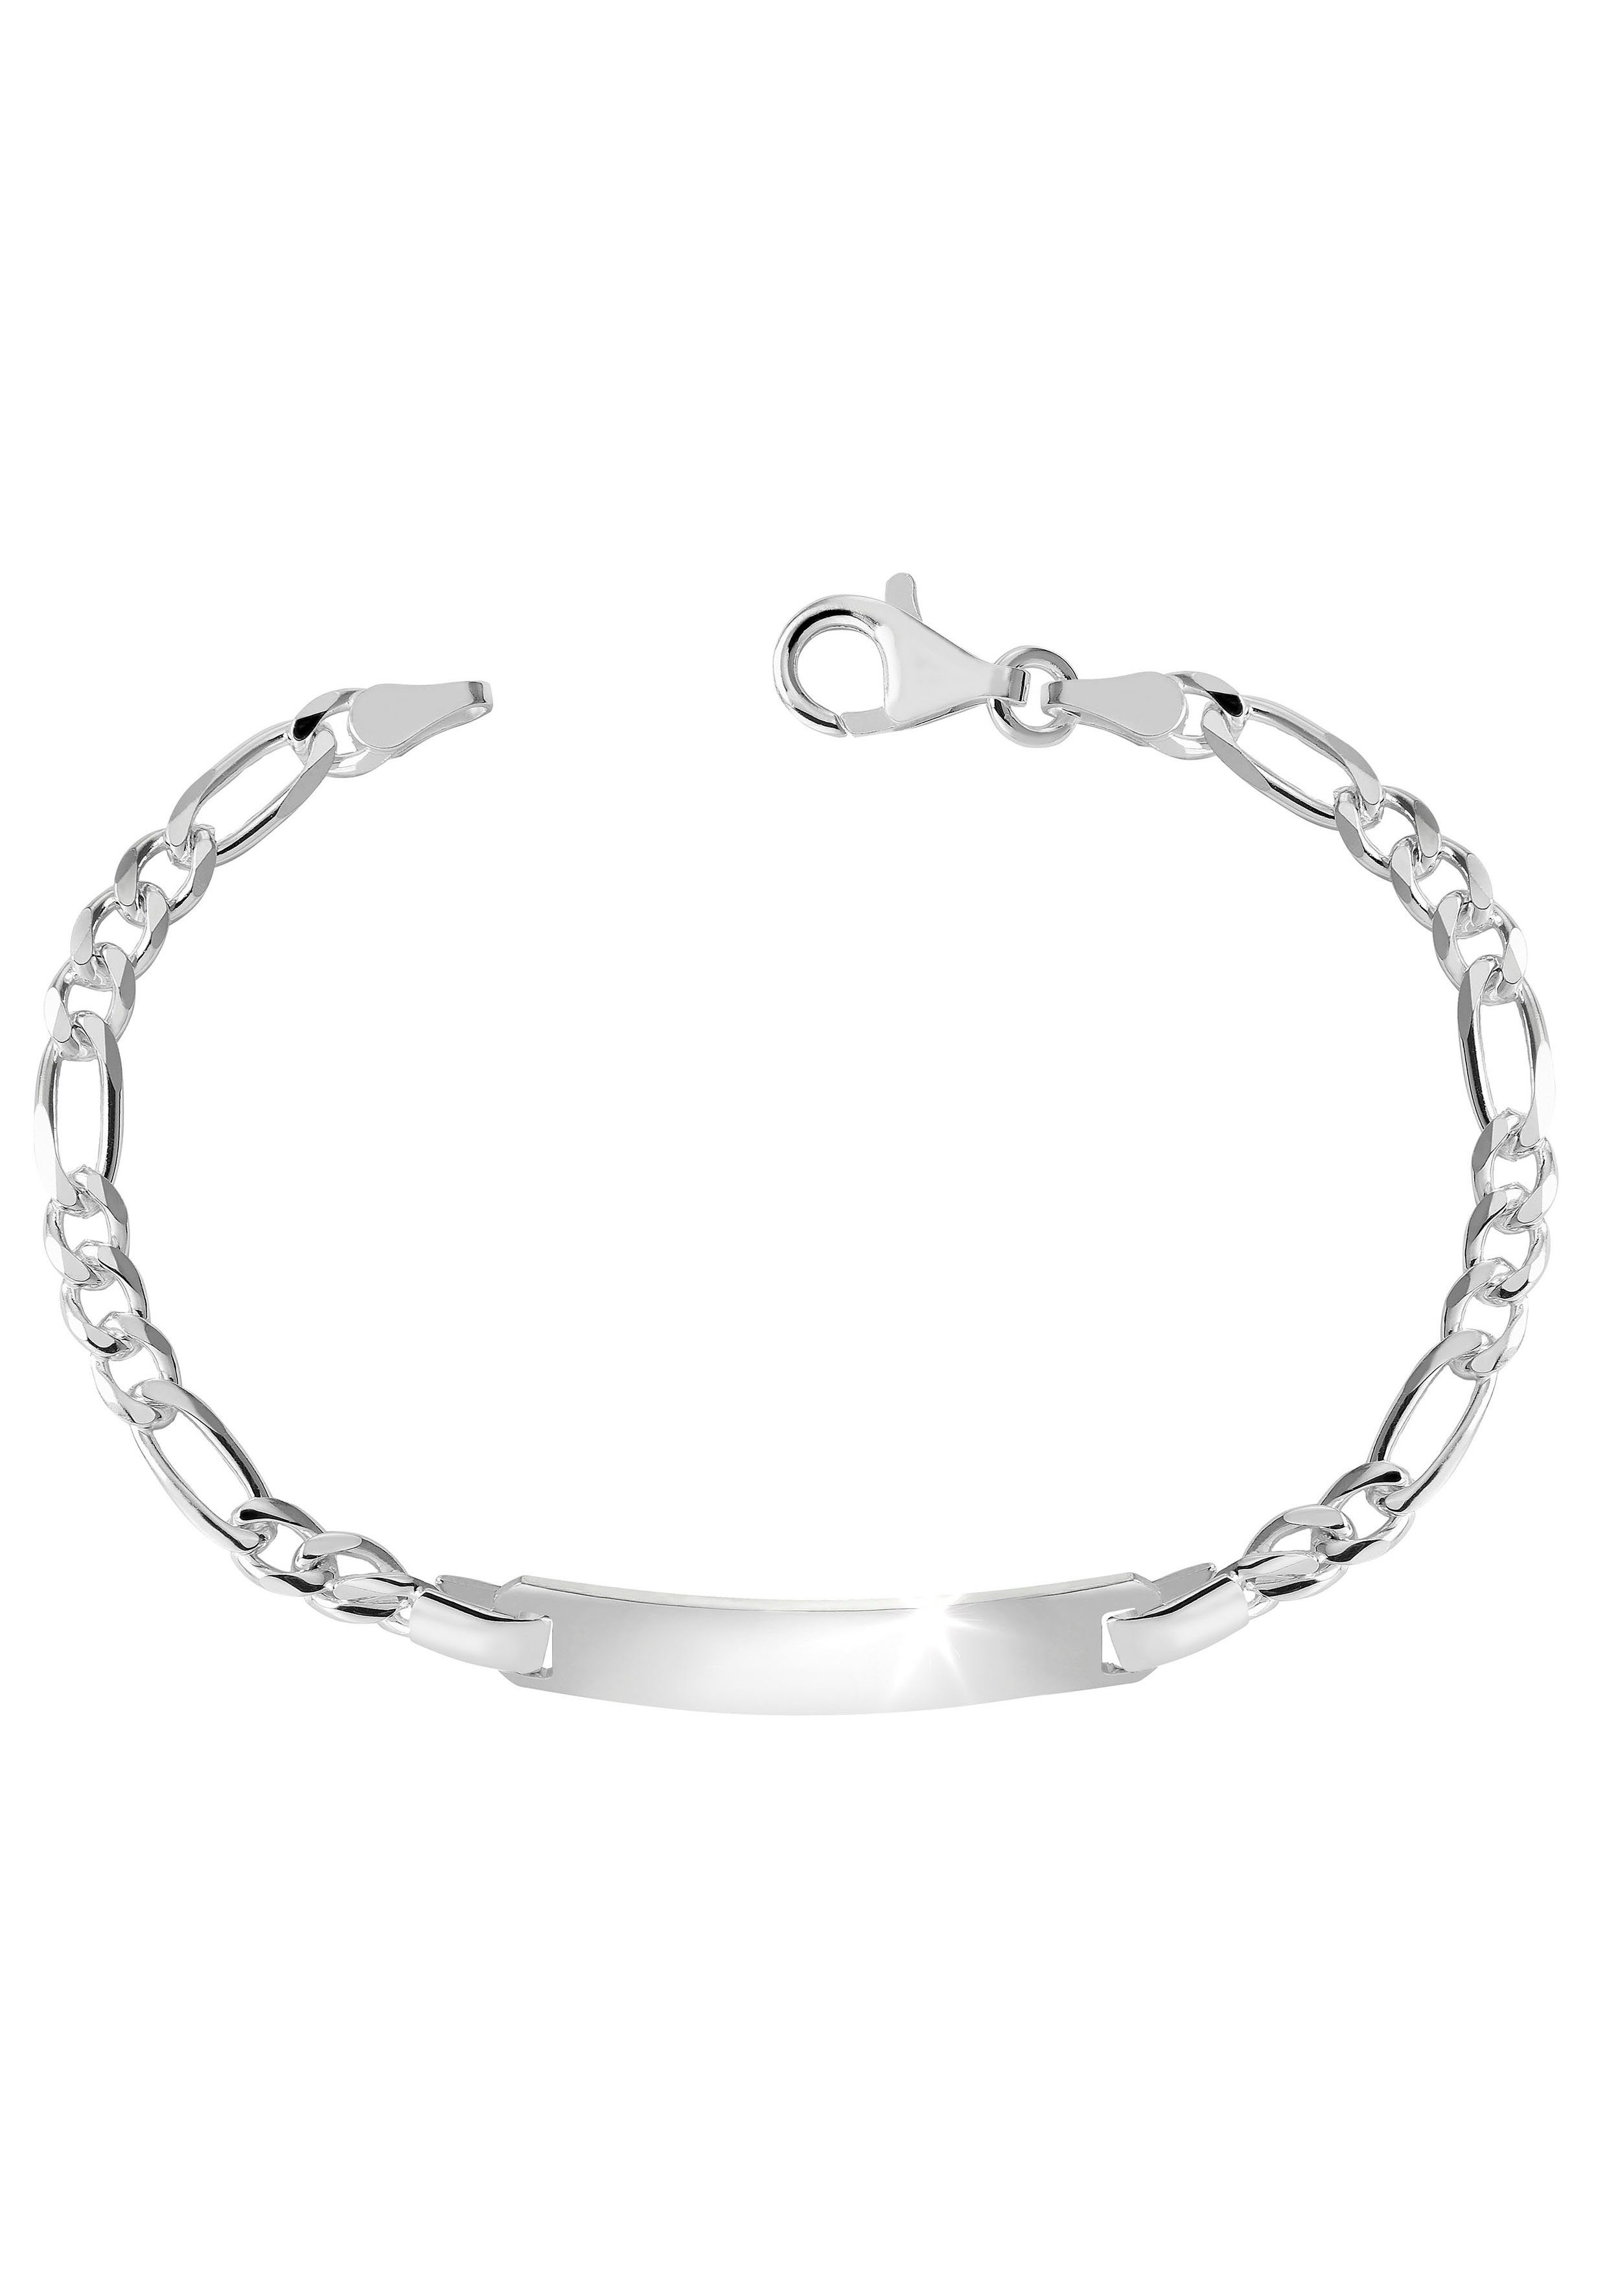 Firetti ID Armband Schmuck Geschenk Silber 925 Armkette Figarokette, zu Hoodie, Kleid, Shirt, Jeans, Sneaker! Anlass Geburtstag Weihnachten